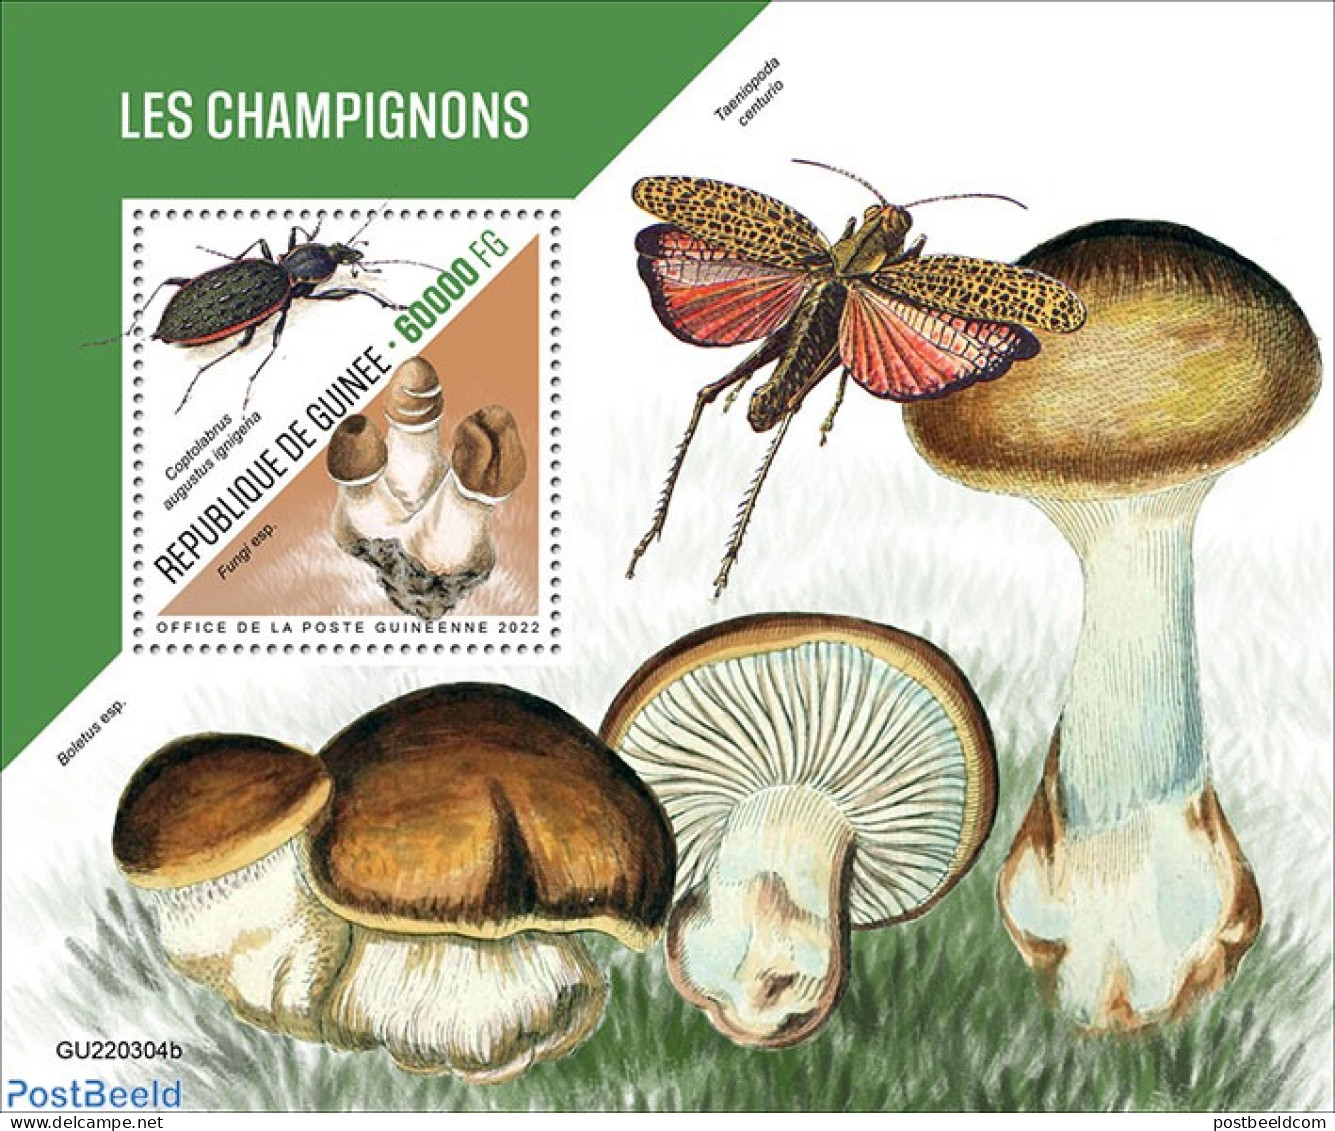 Guinea, Republic 2022 Mushrooms, Mint NH, Nature - Insects - Mushrooms - Champignons